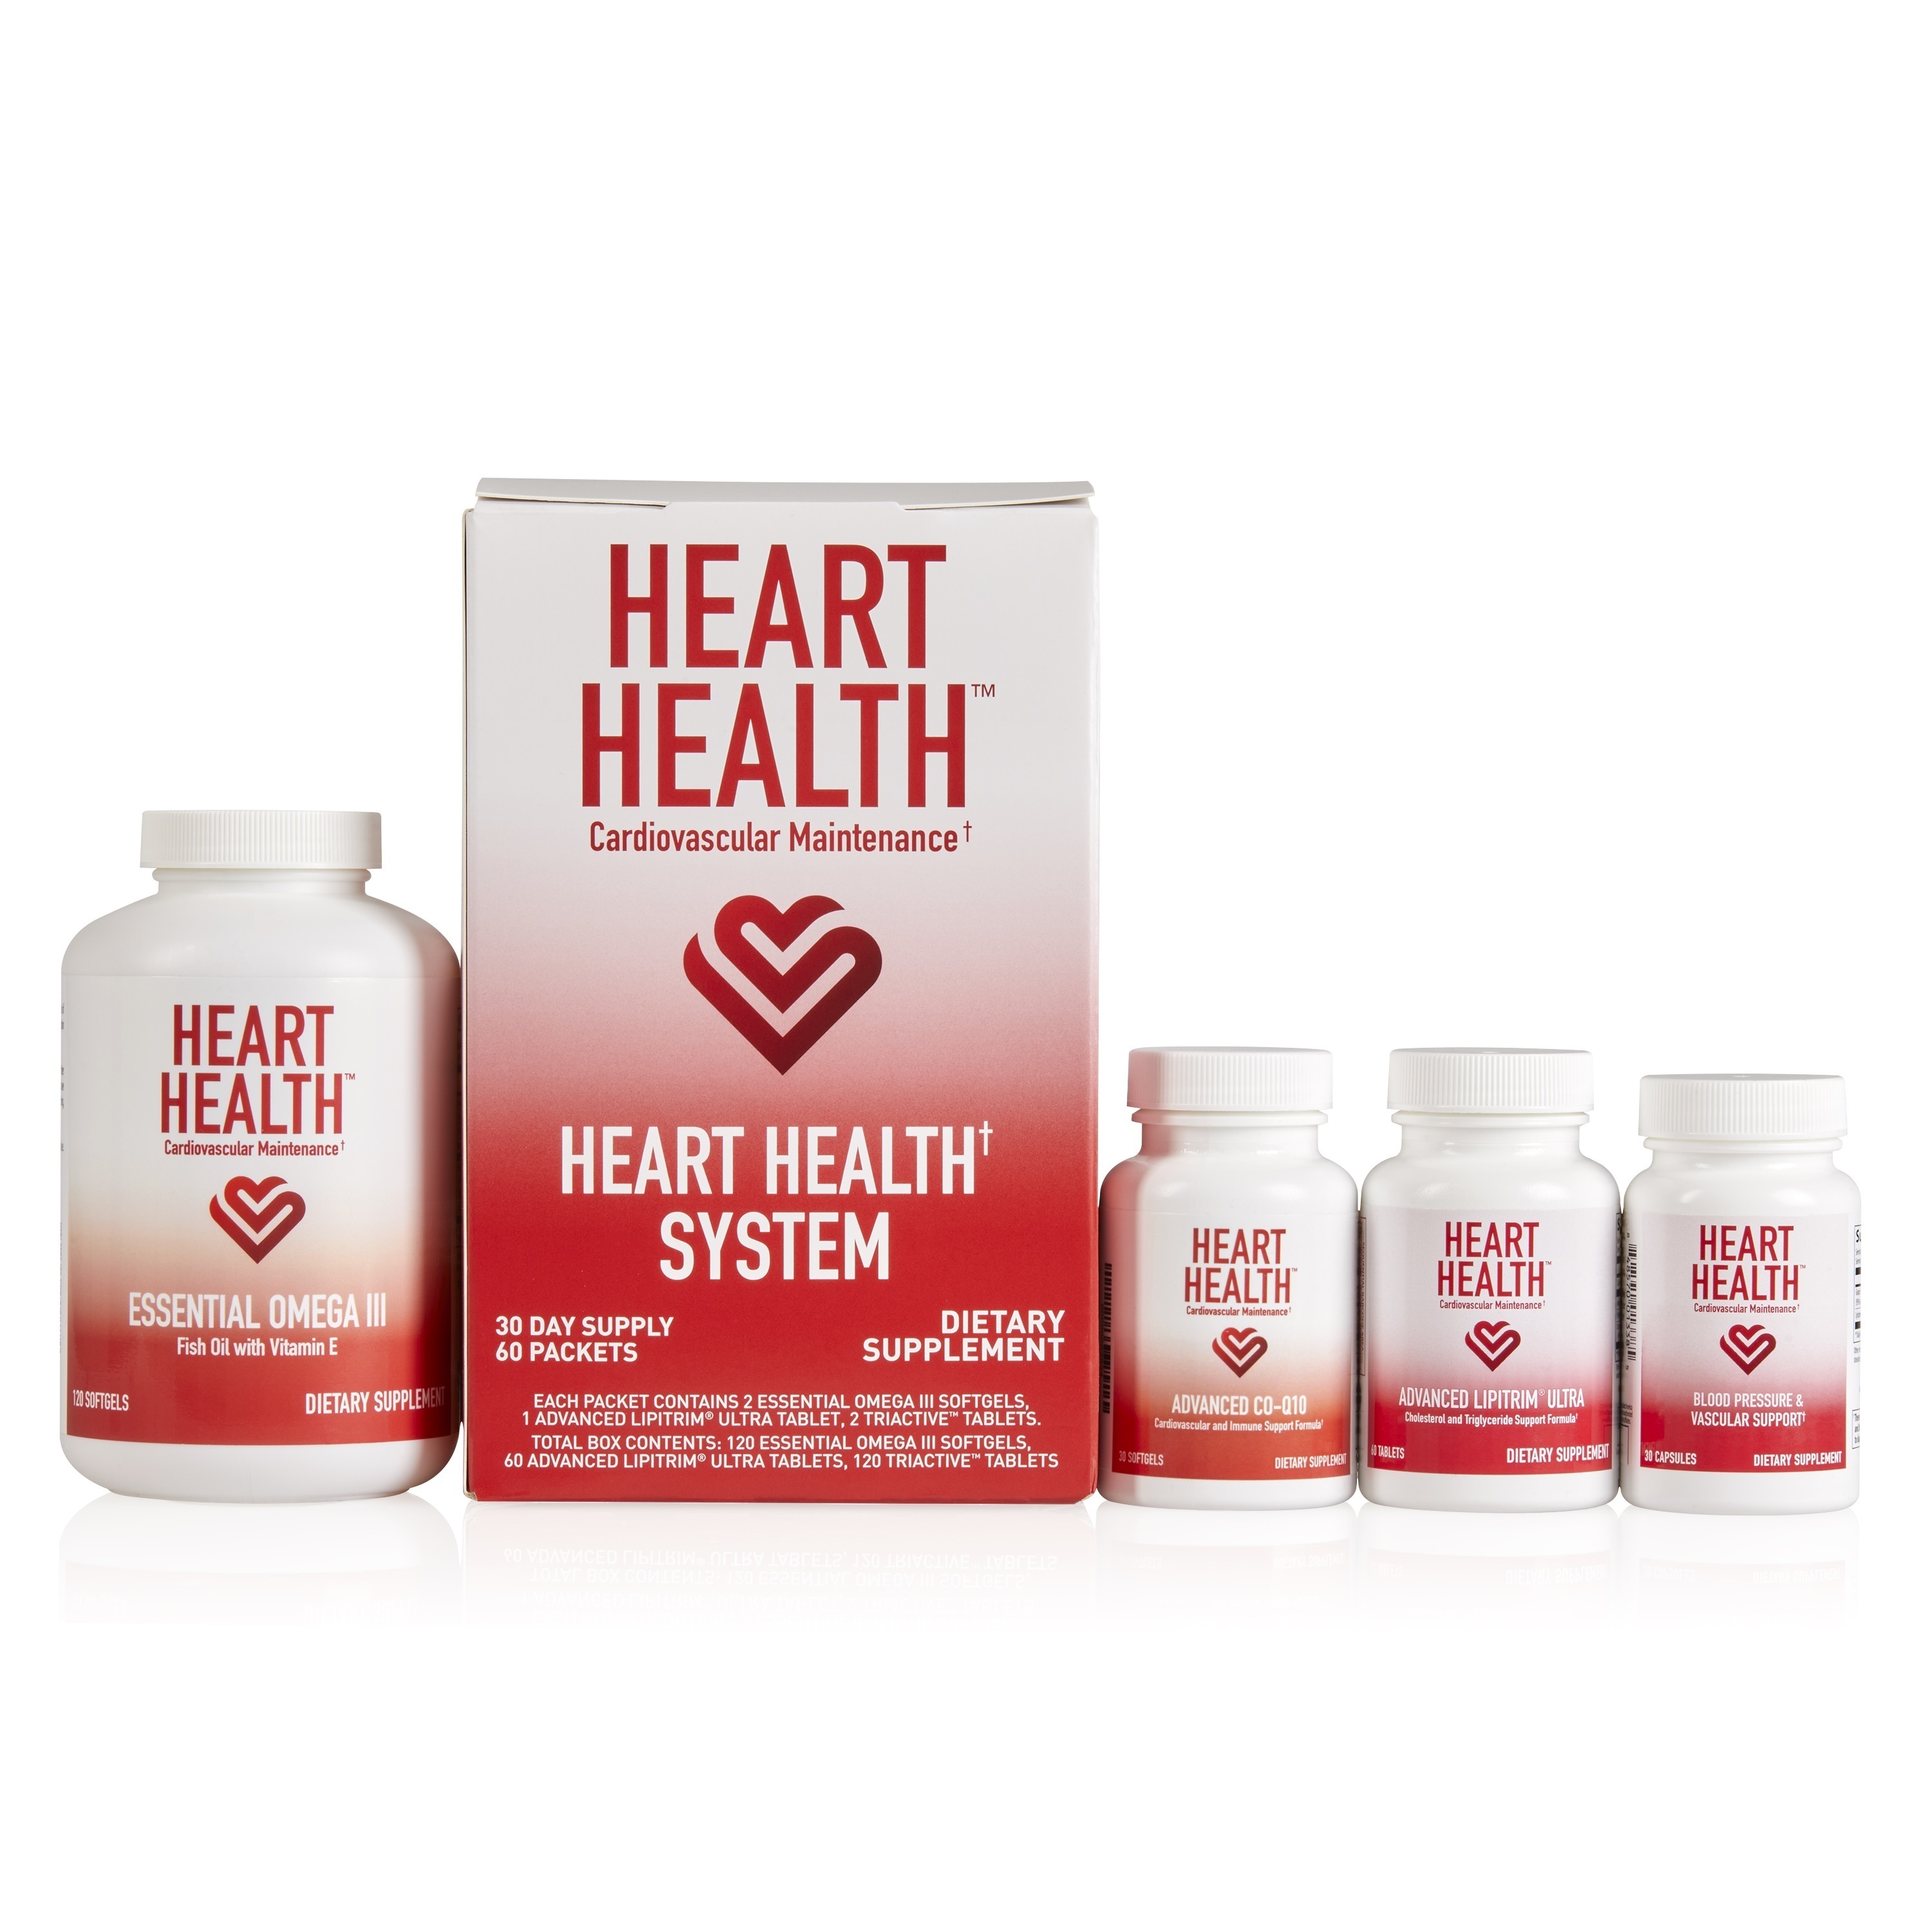 Heart Health&#8482; Advanced Co-Q10 (Cardiovascular & Immune Support) alternate image